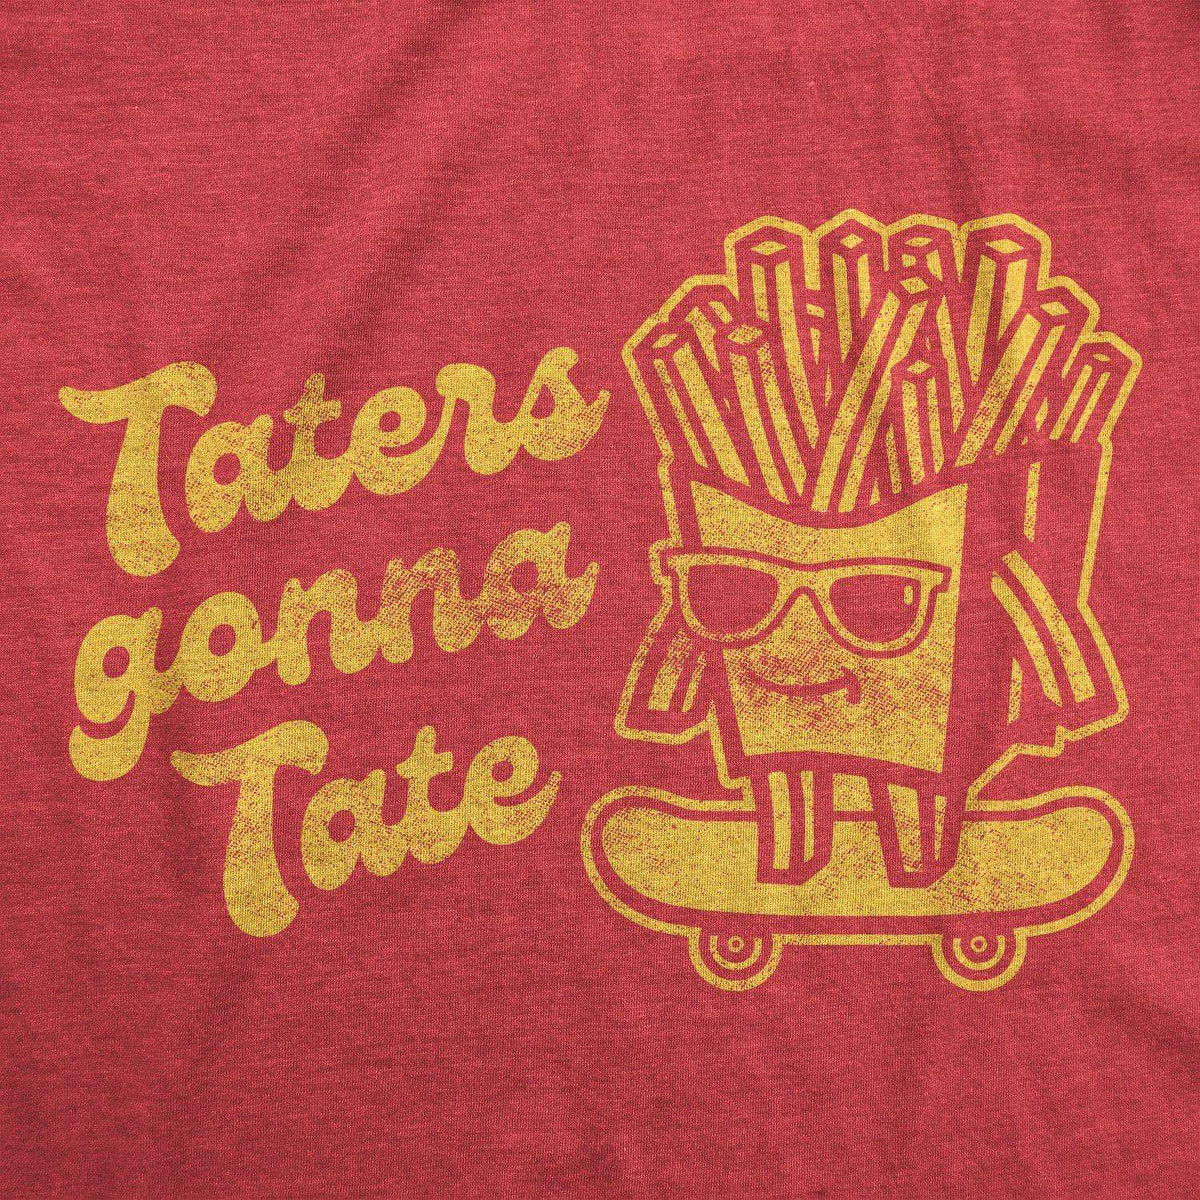 Taters Gonna Tate Men&#39;s Tshirt - Crazy Dog T-Shirts